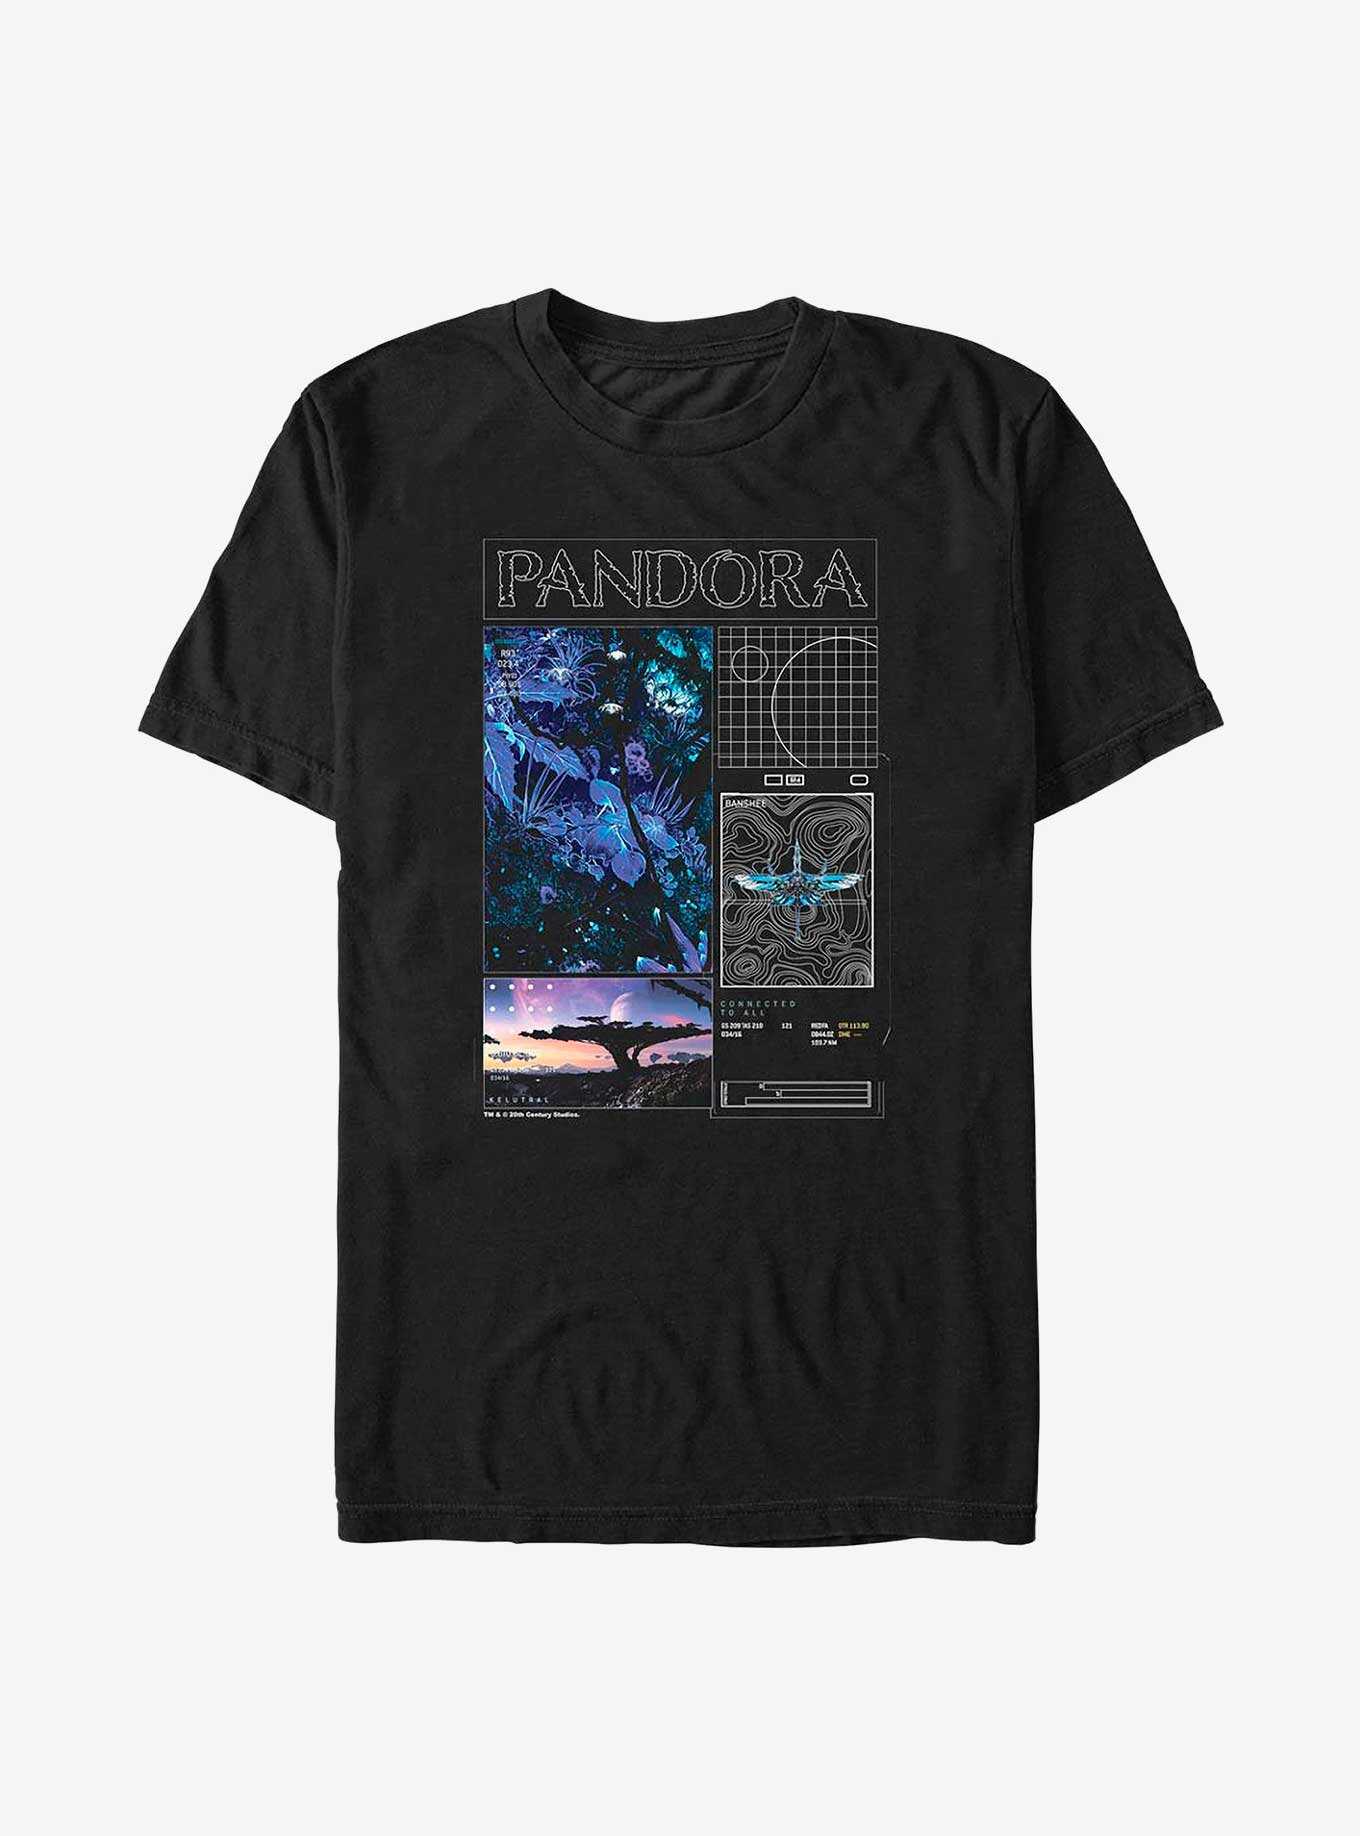 Avatar Pandora Schematic T-Shirt, , hi-res